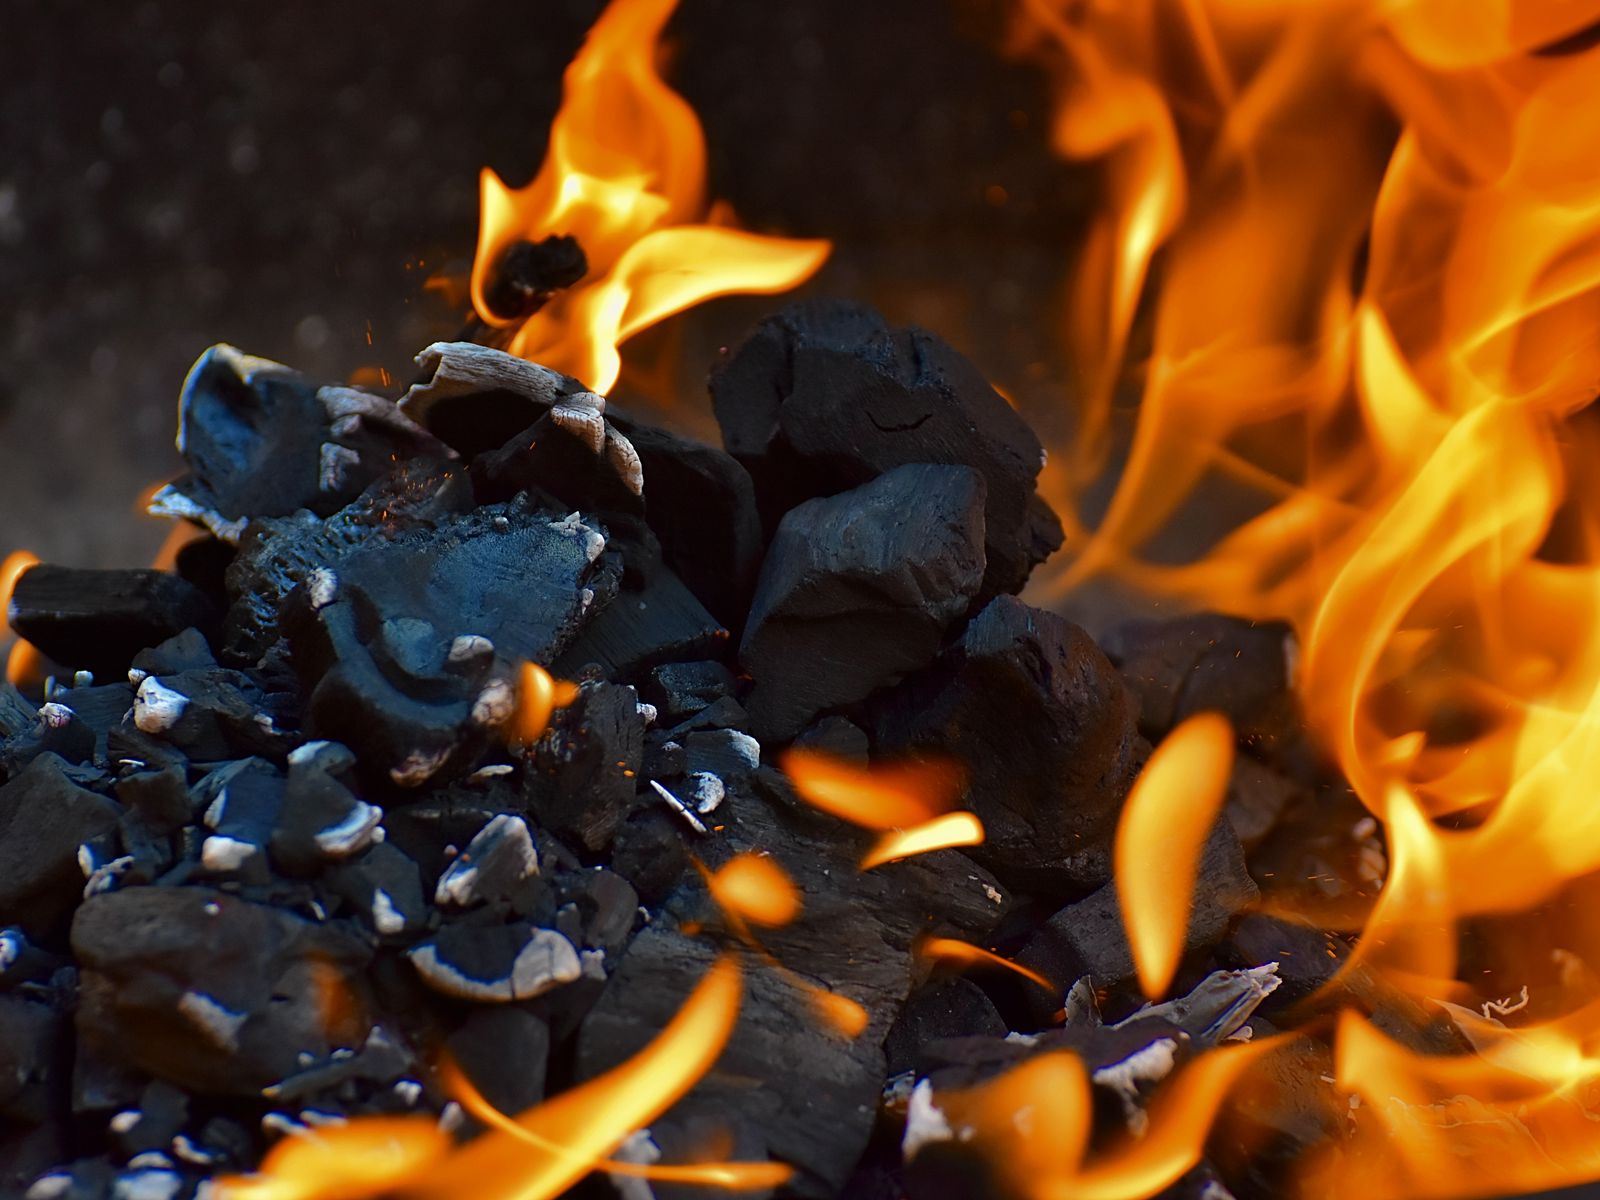 Download wallpaper 1600x1200 fire, embers, flame, burn, burned standard 4:3 HD background